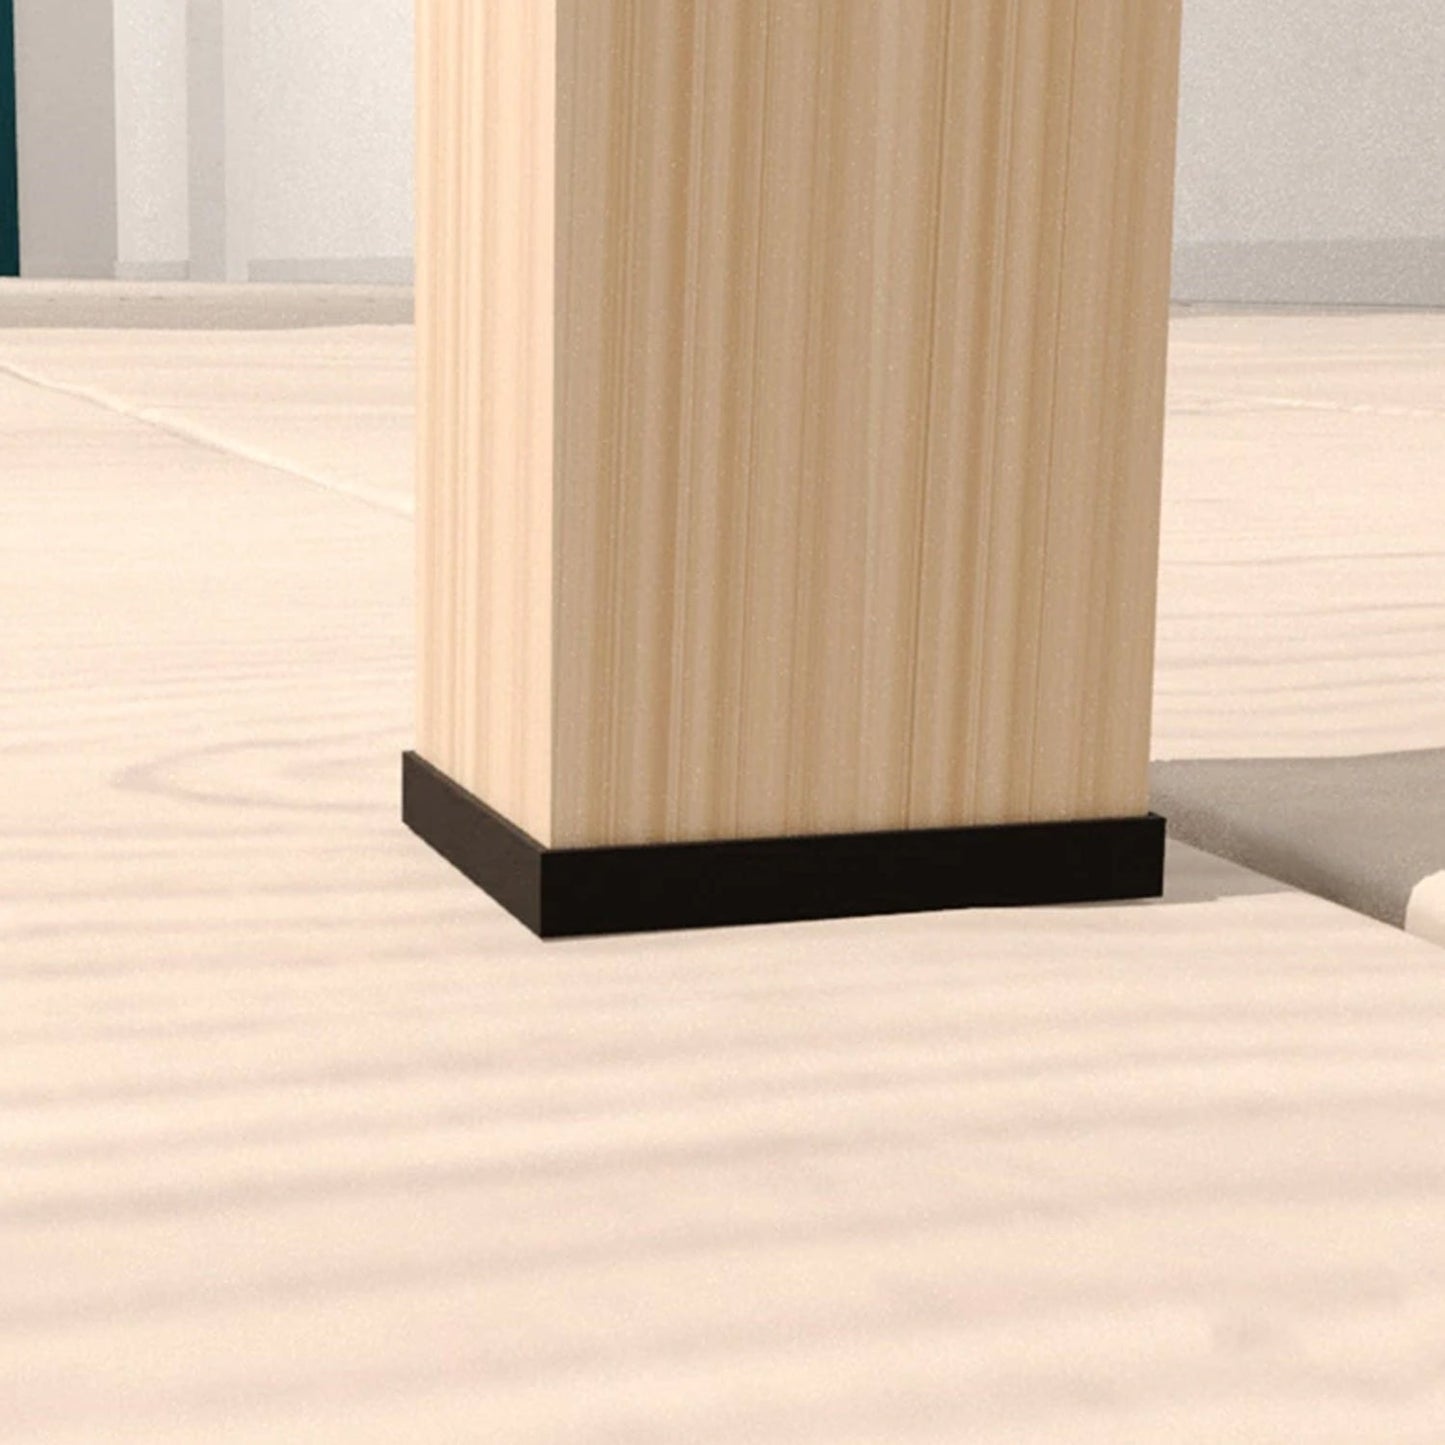 12Pcs Self Adhesive Non-Slip for Protecting Tiles, Shiny Hard Wood Floor